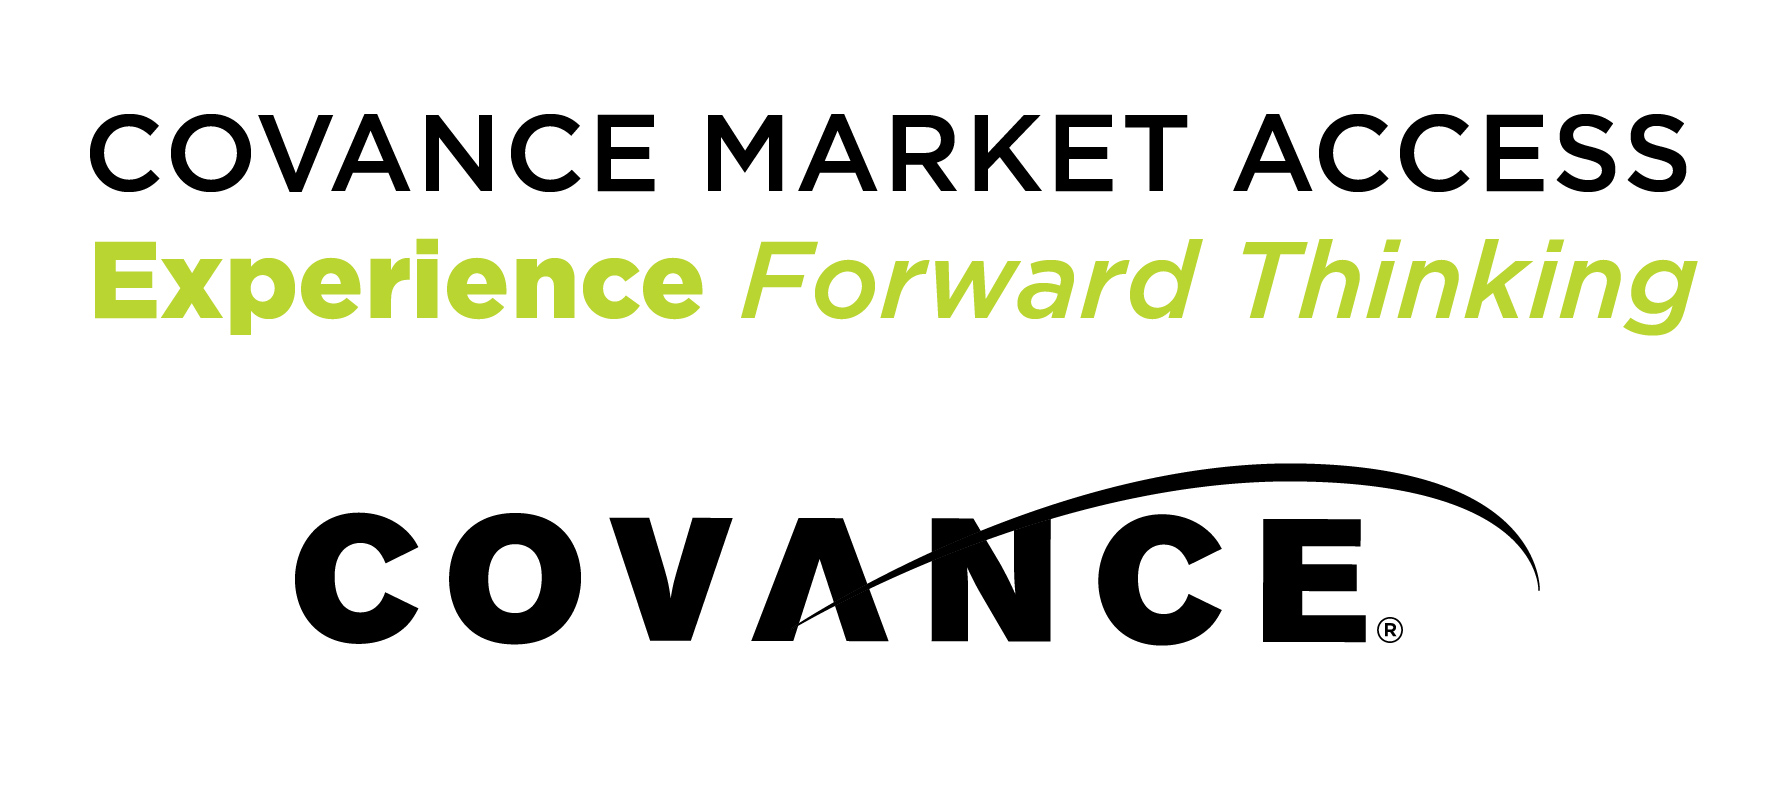 Covance Market Access